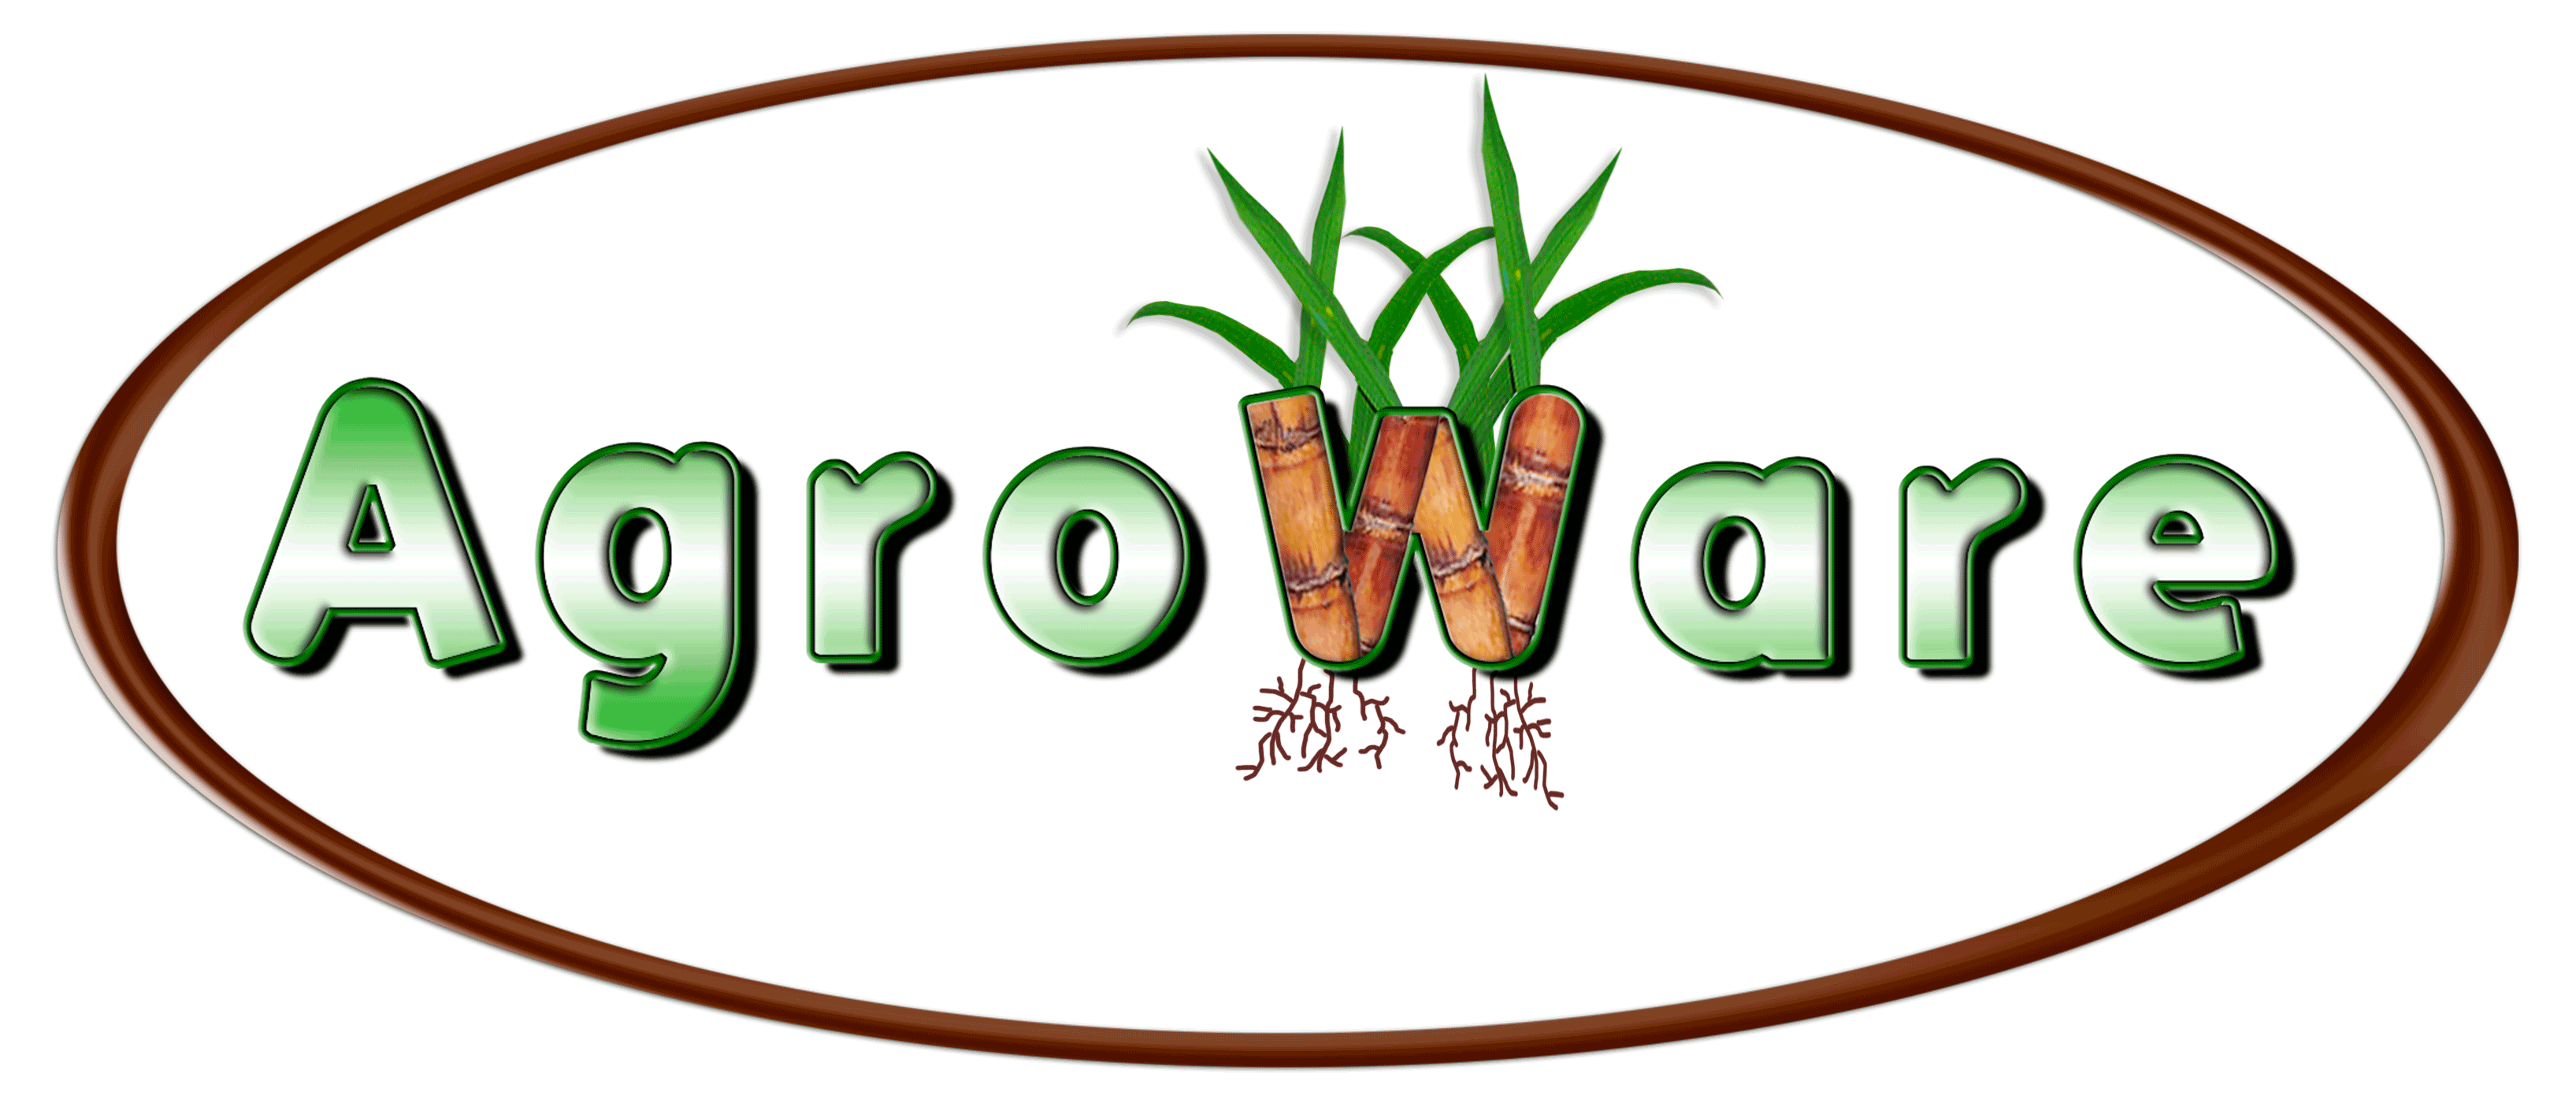 Agroware Logo